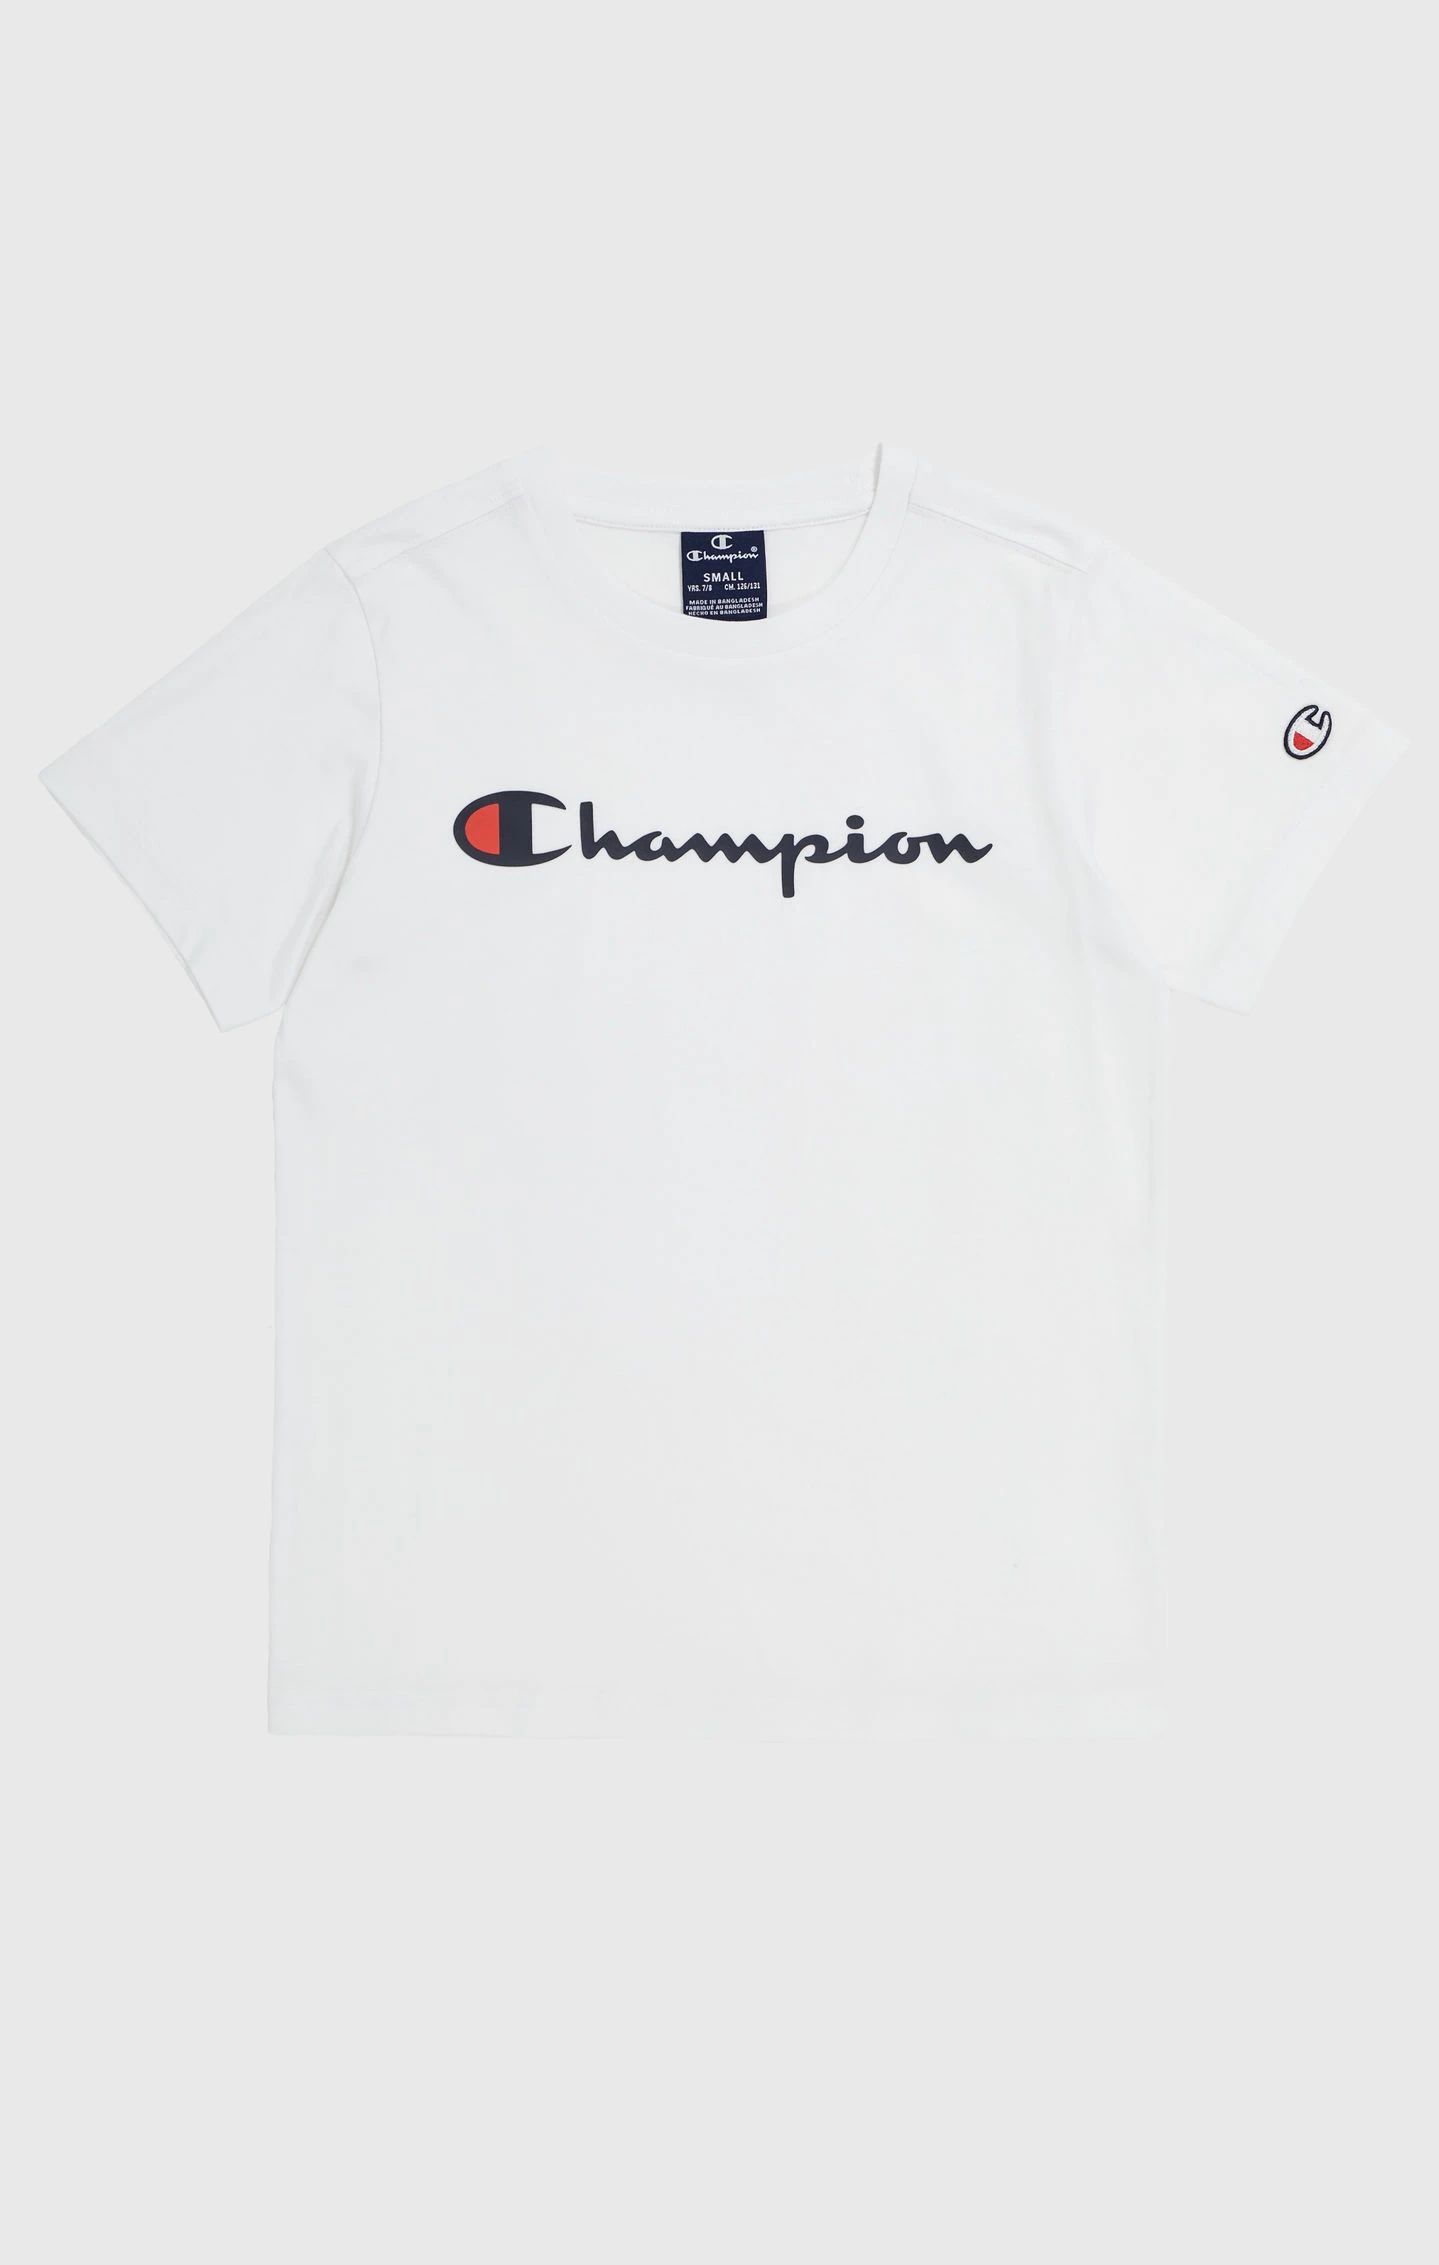 Champion - K's Classic tee